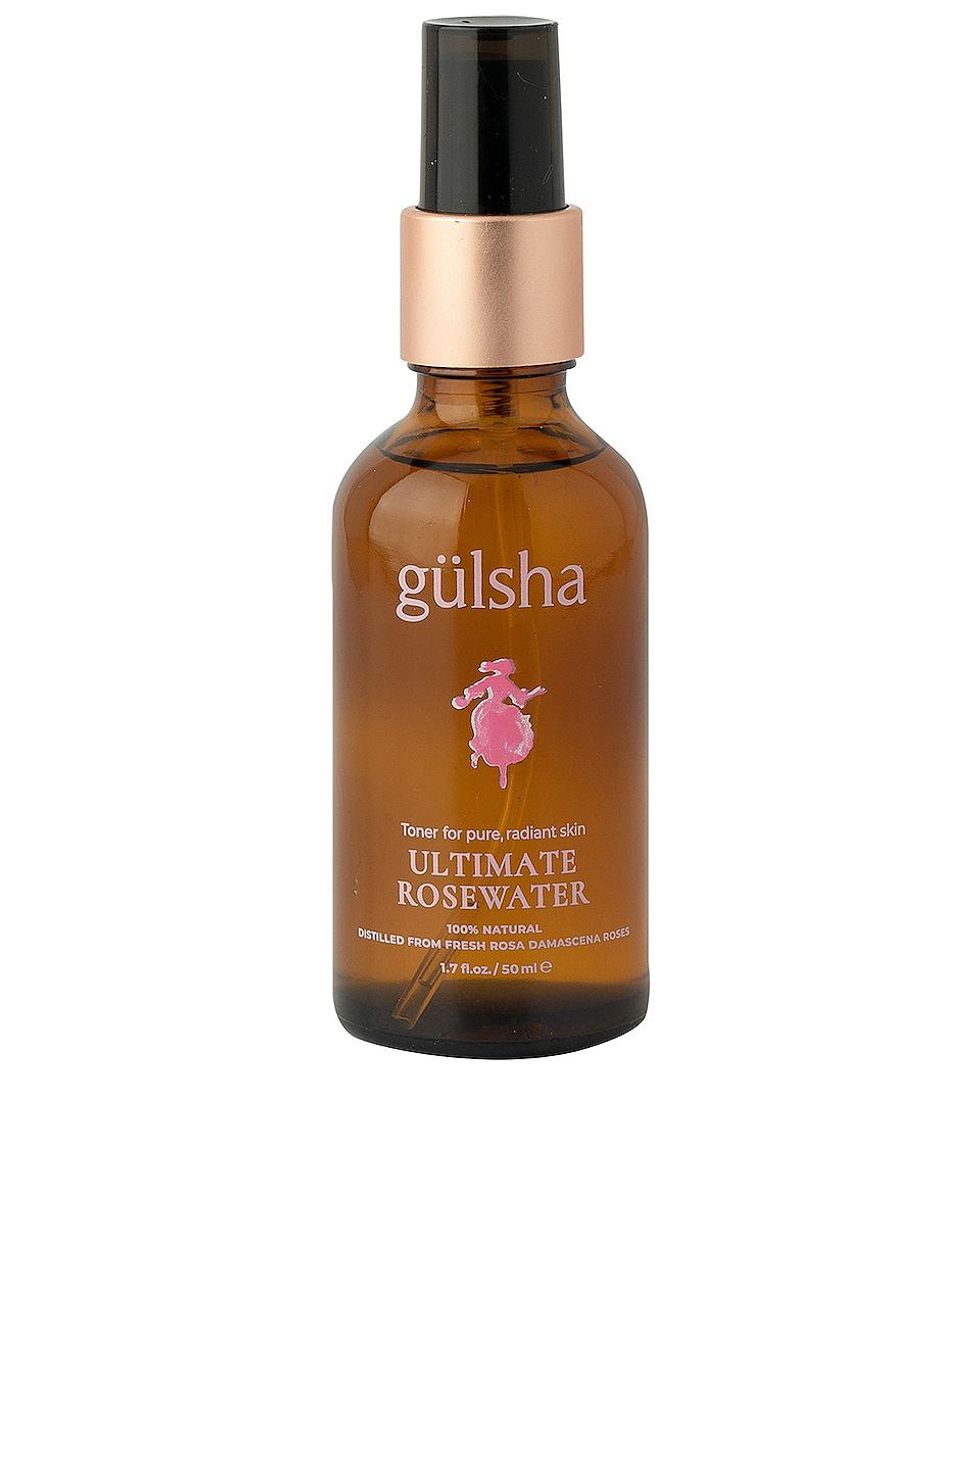 Gulsha Ultimate Rosewater Spray Holiday Gifts